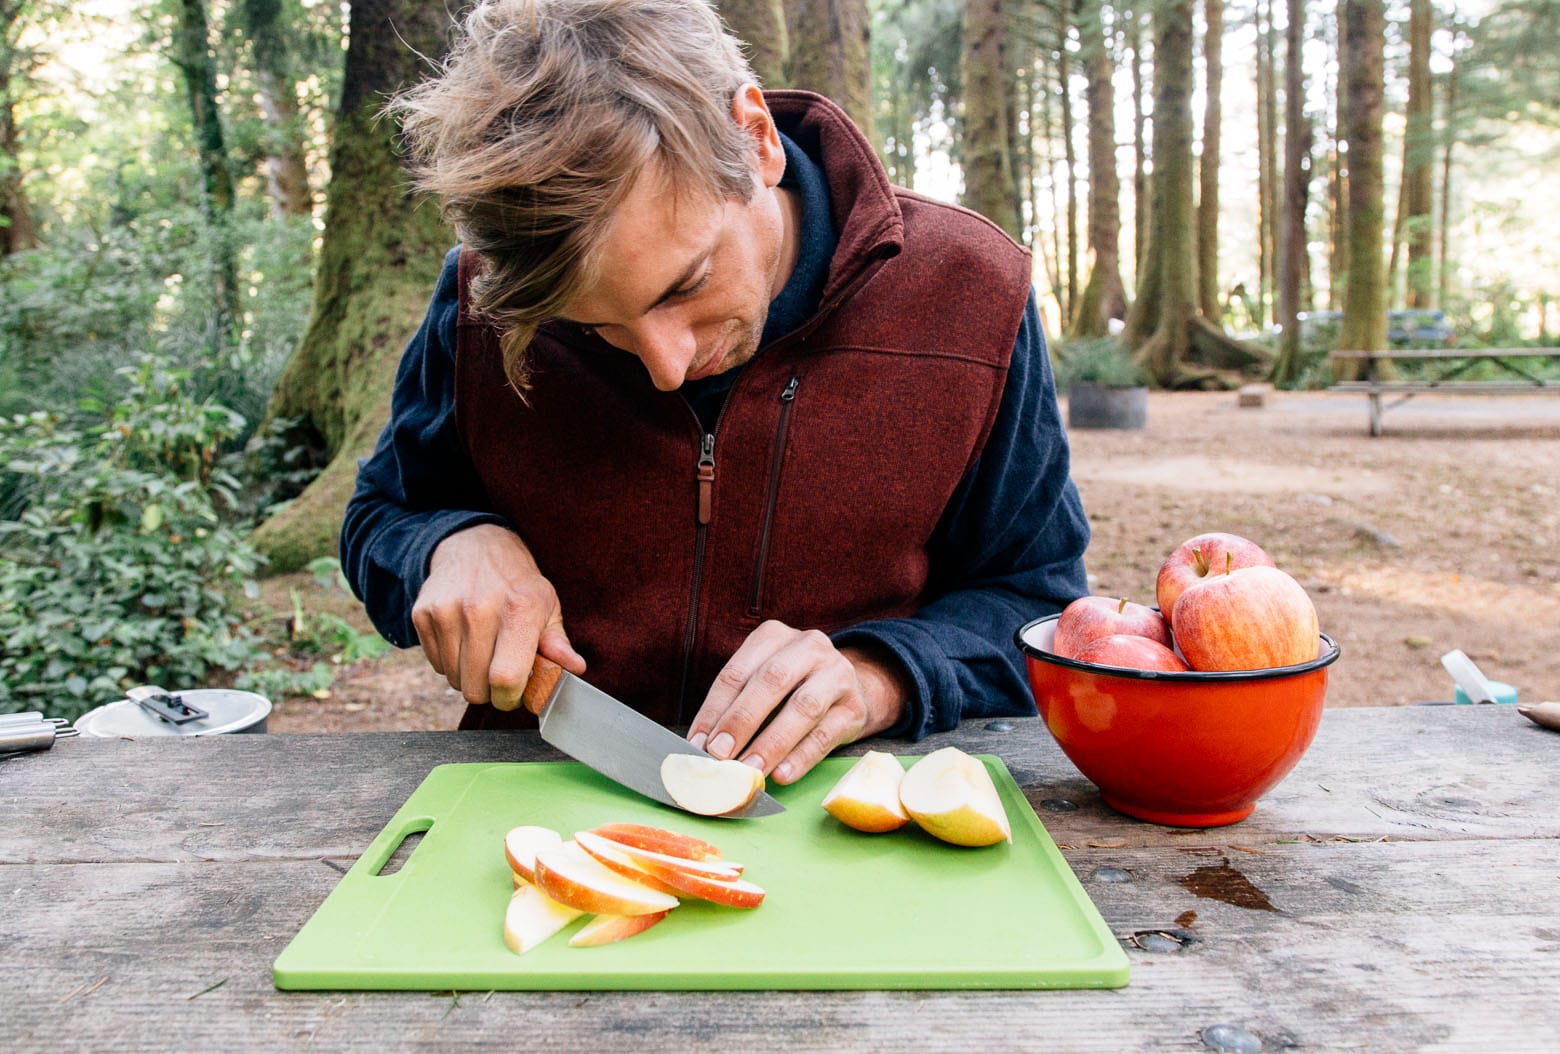 Michael slicing apples at a picnic tables